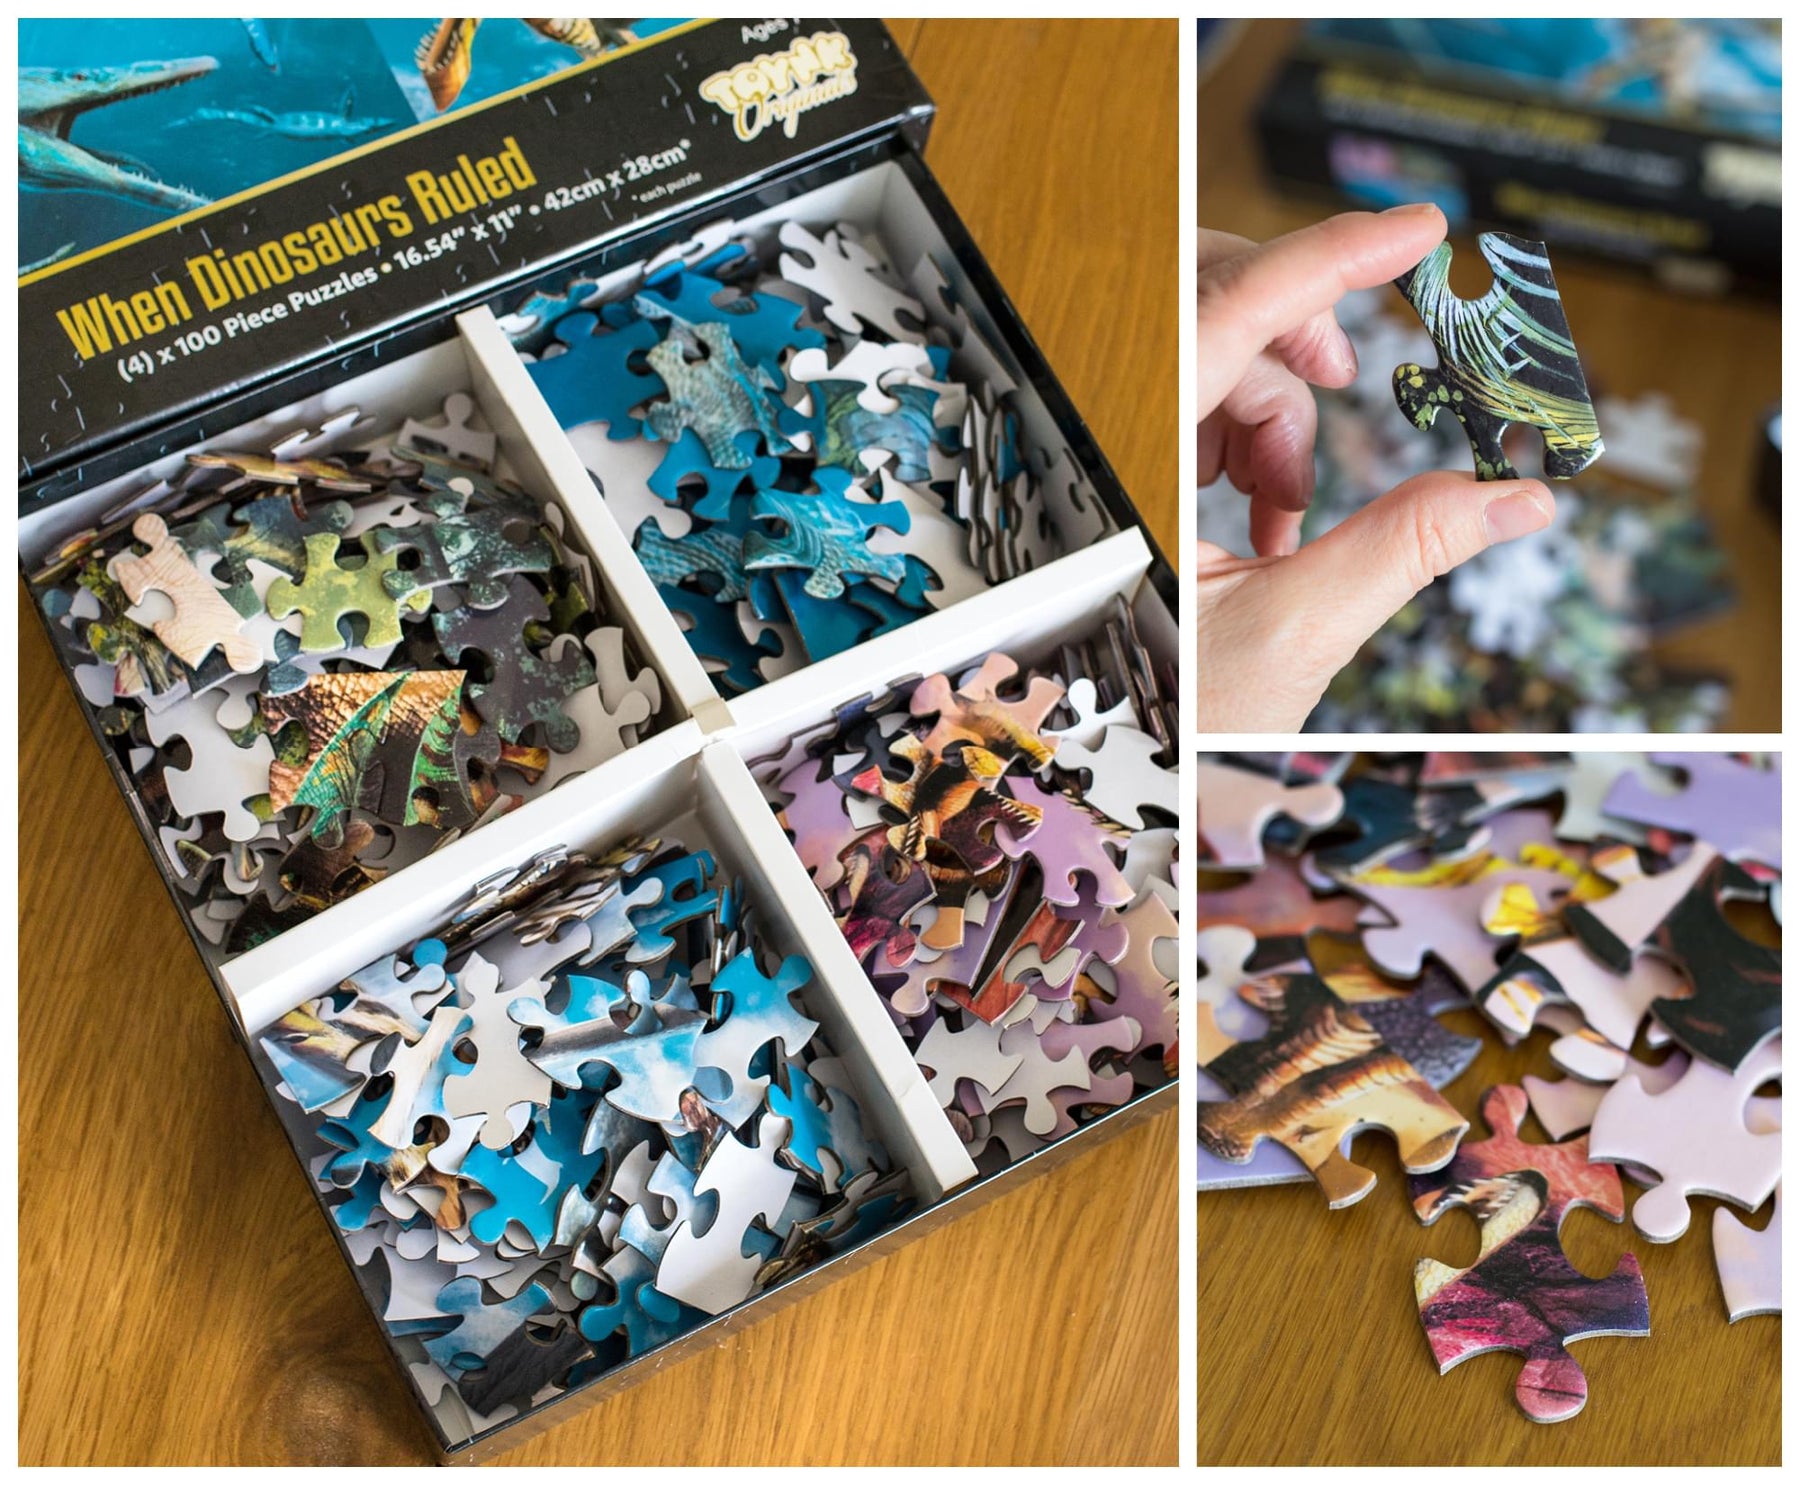 Dinosaur 100-Piece Jigsaw Puzzle Box Bundle | Set of 4